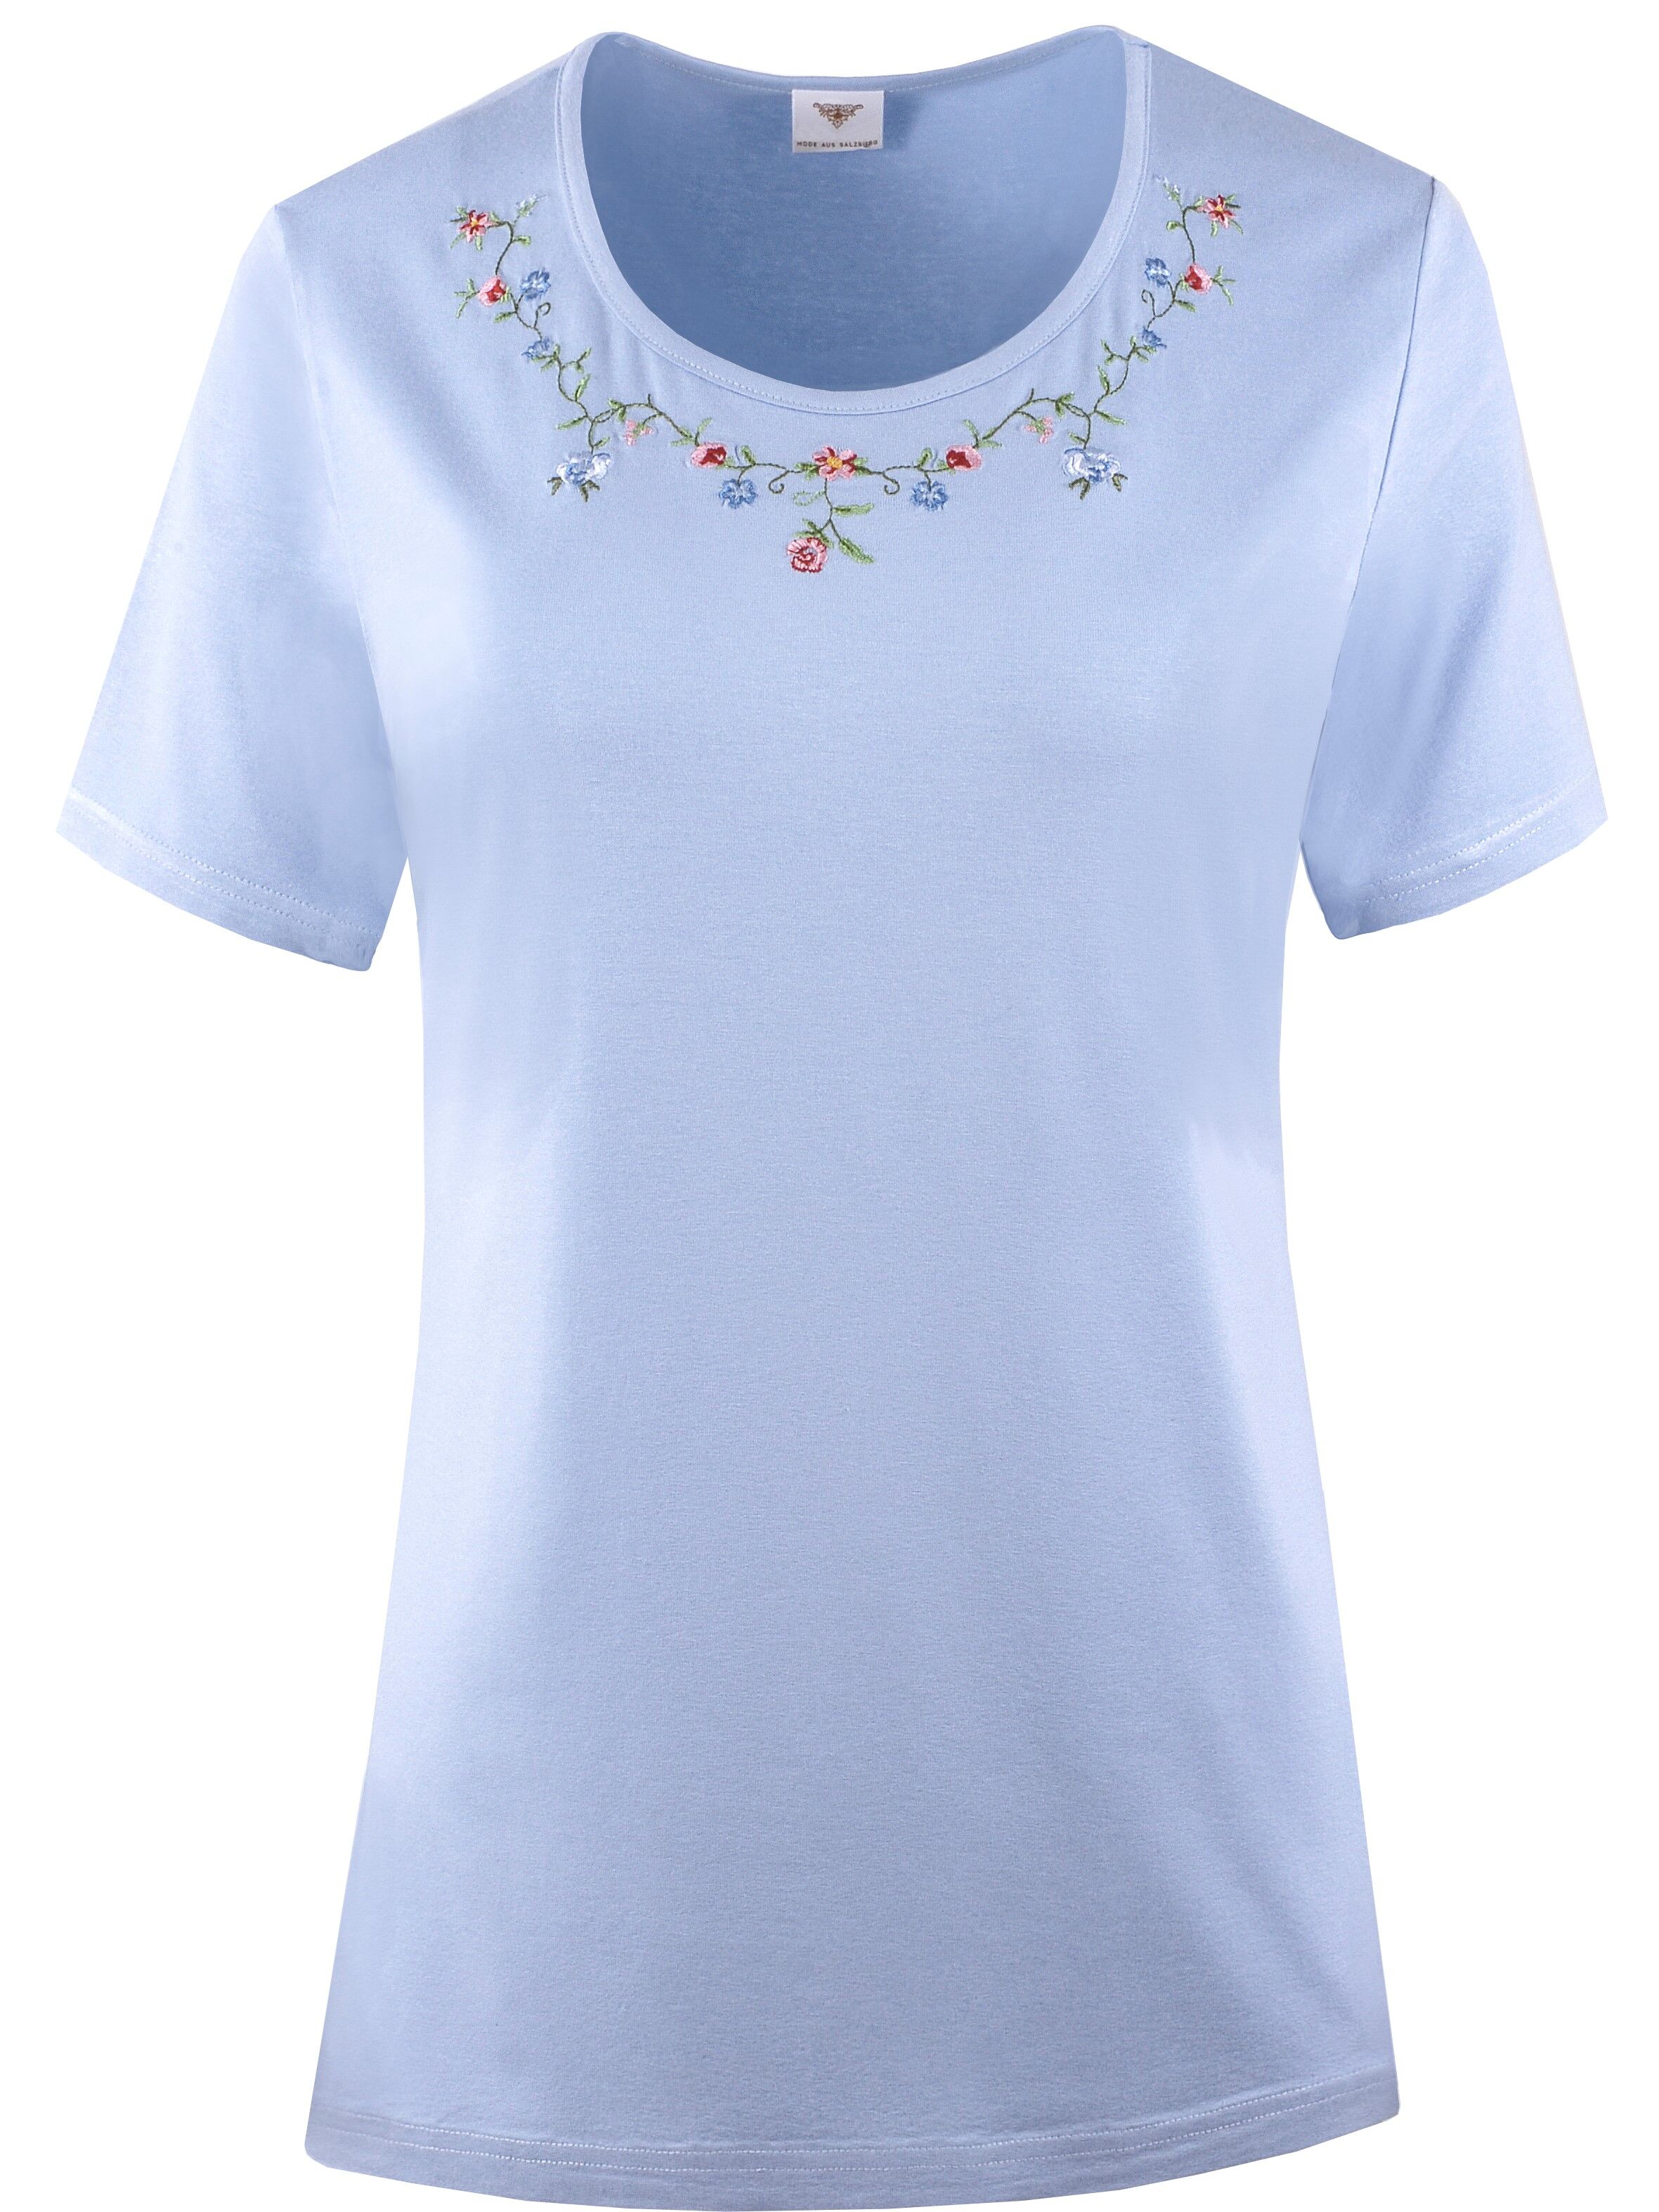 PREMIUM Trachtenshirt Damen T-Shirt lang Blumen-Stickerei Hellblau